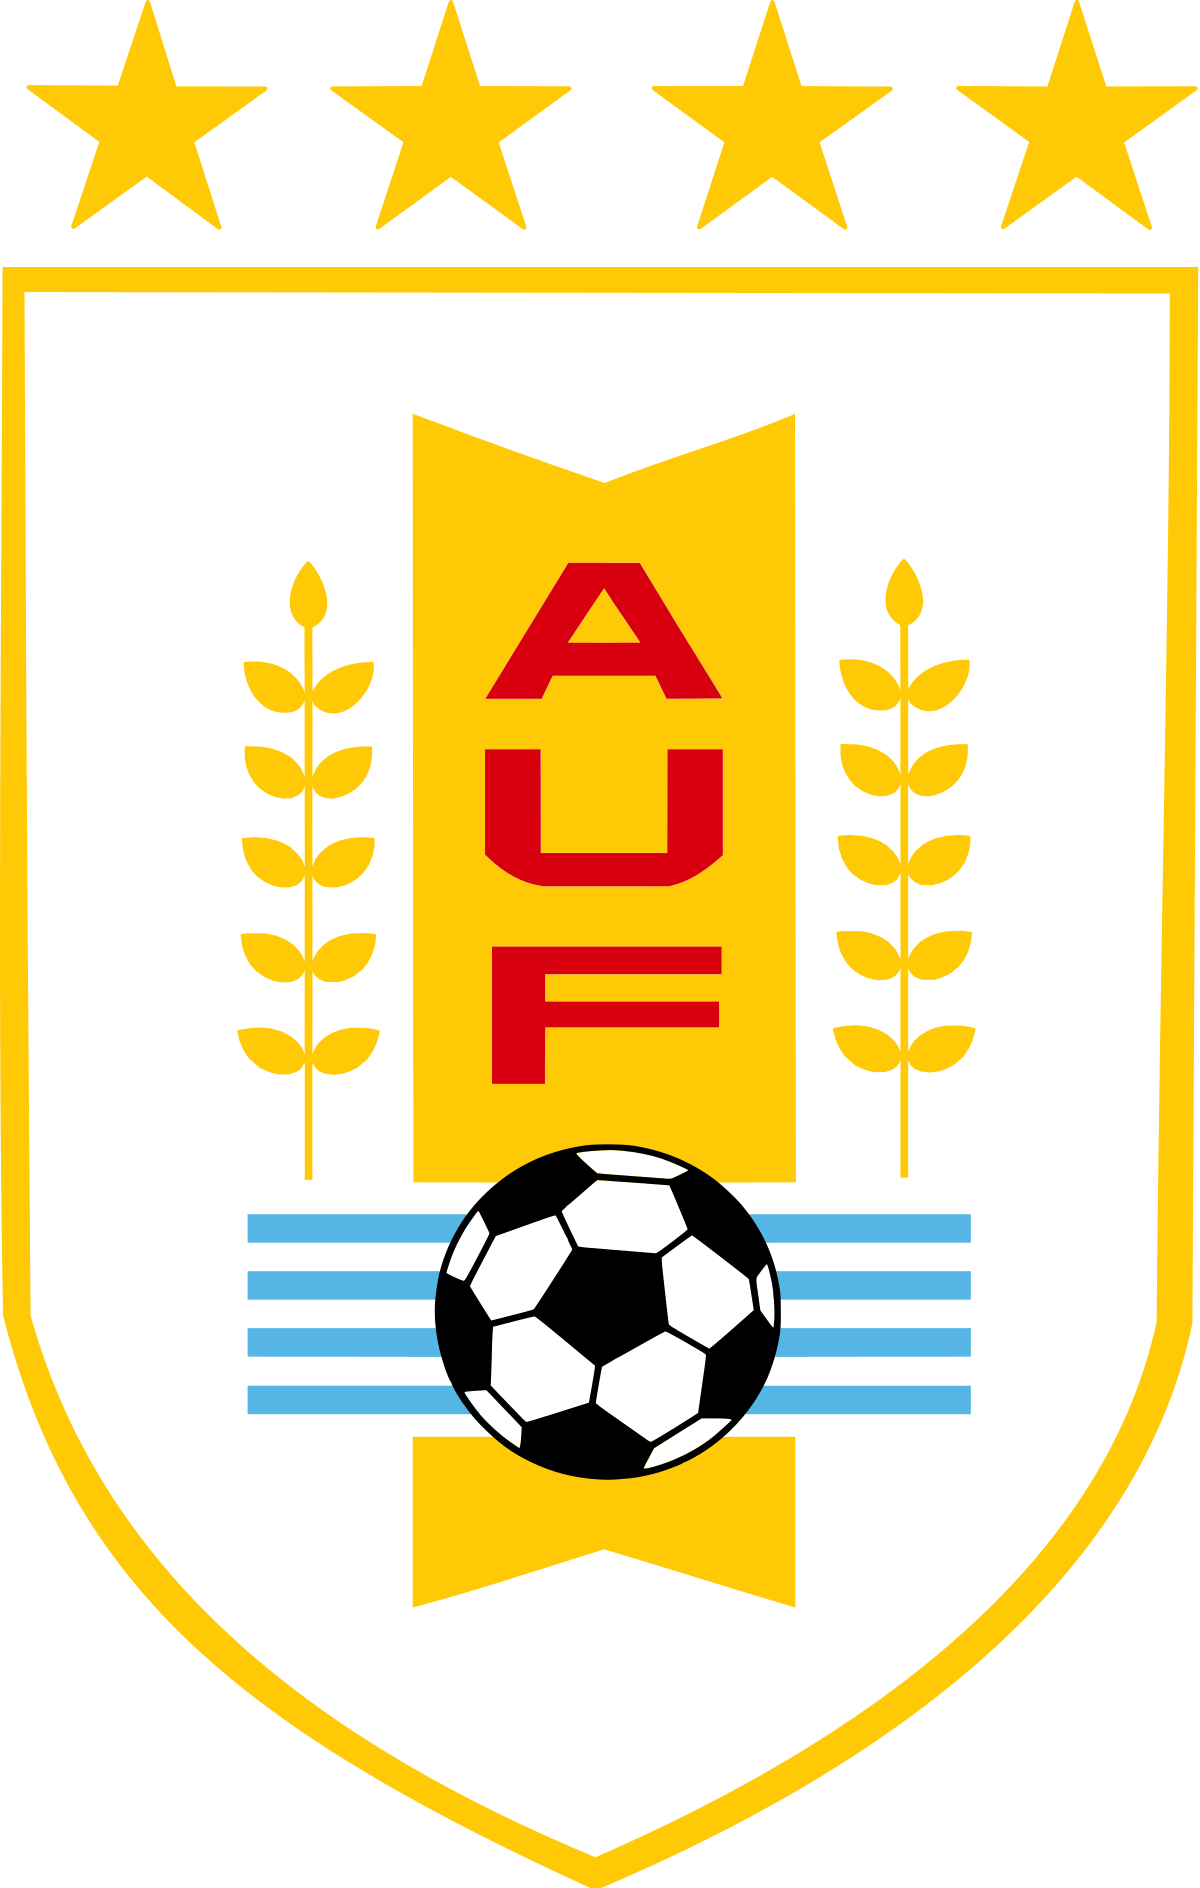 Uruguay W logo